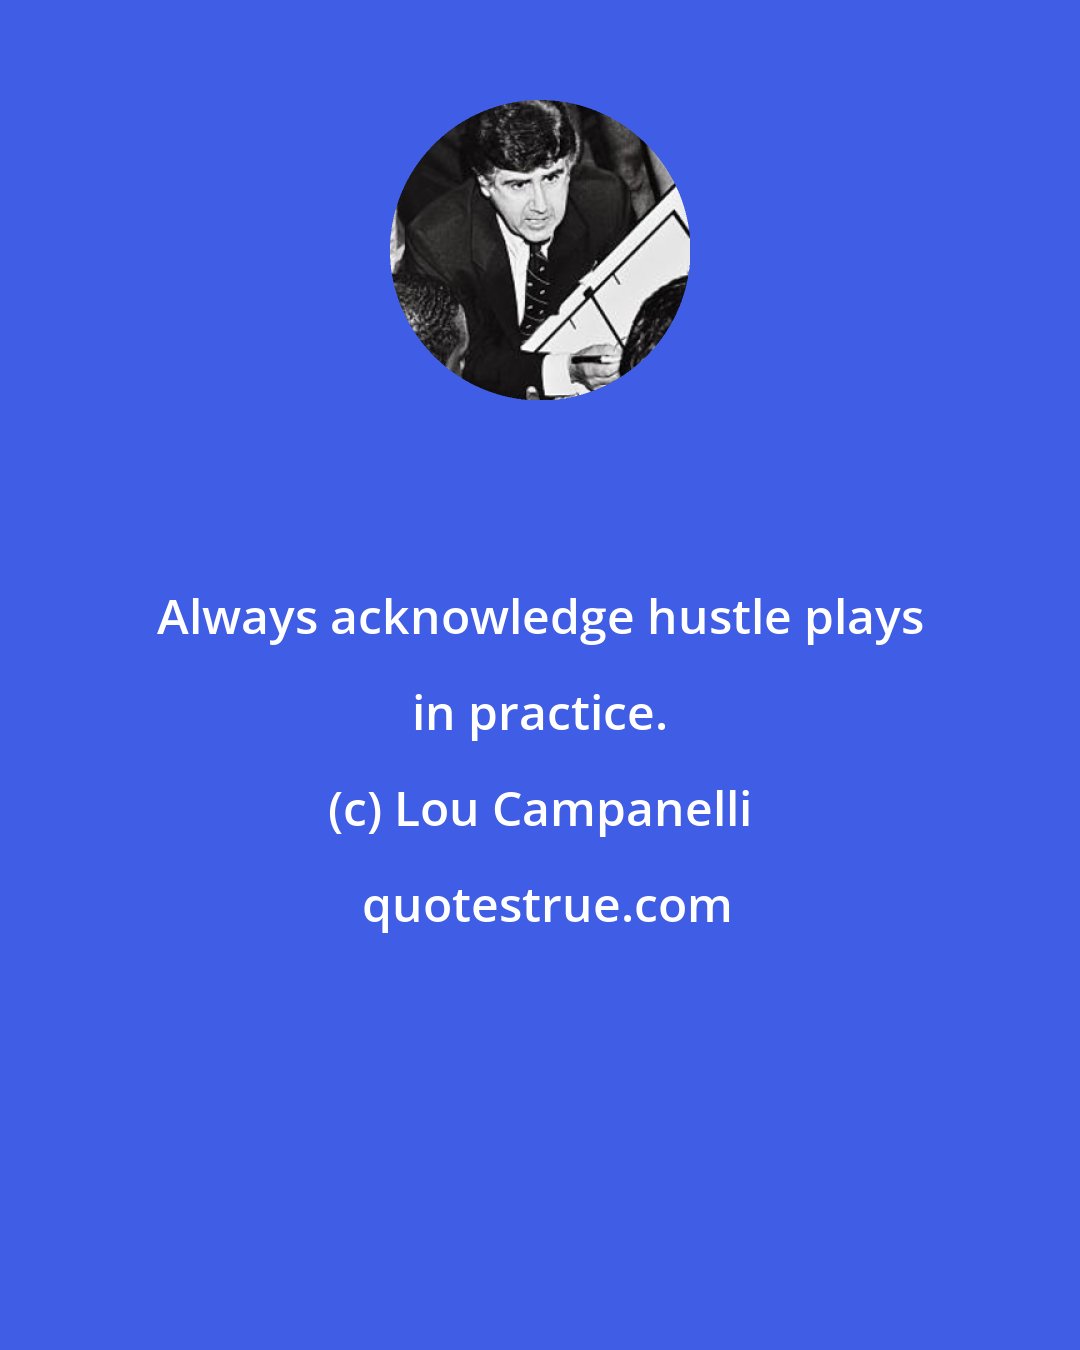 Lou Campanelli: Always acknowledge hustle plays in practice.